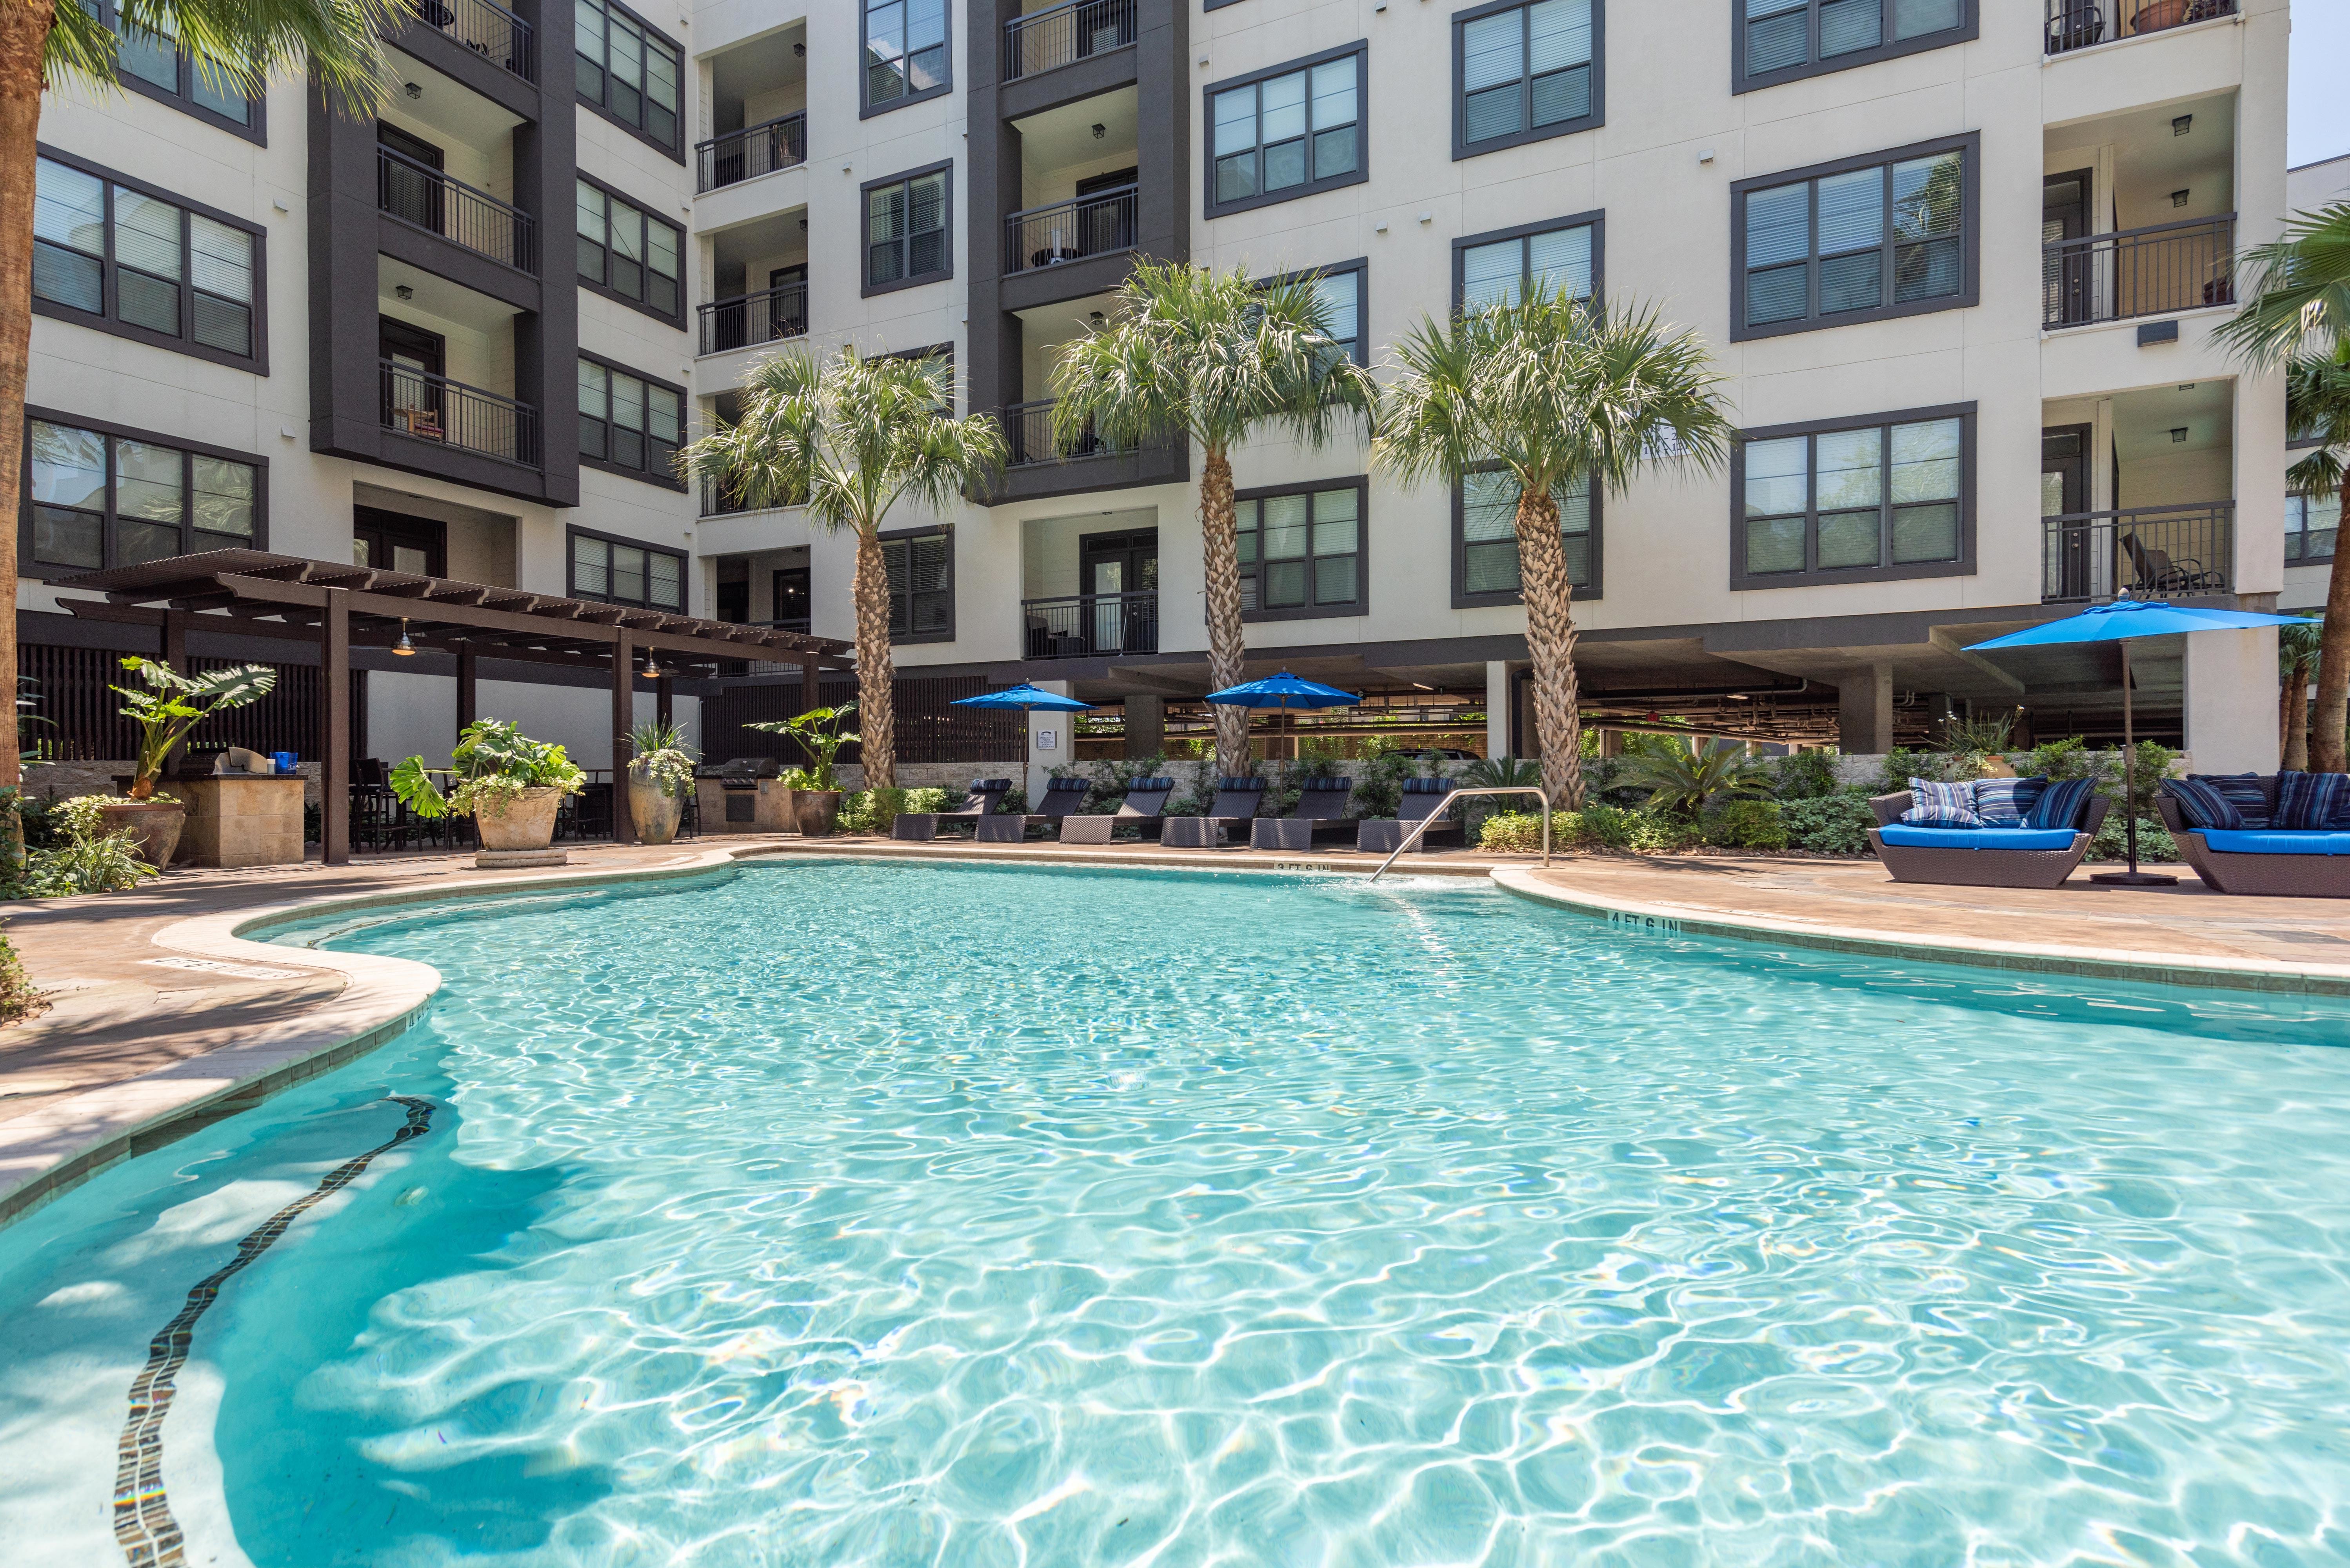 Best Apartments Near Meyerland Houston Tx News Update